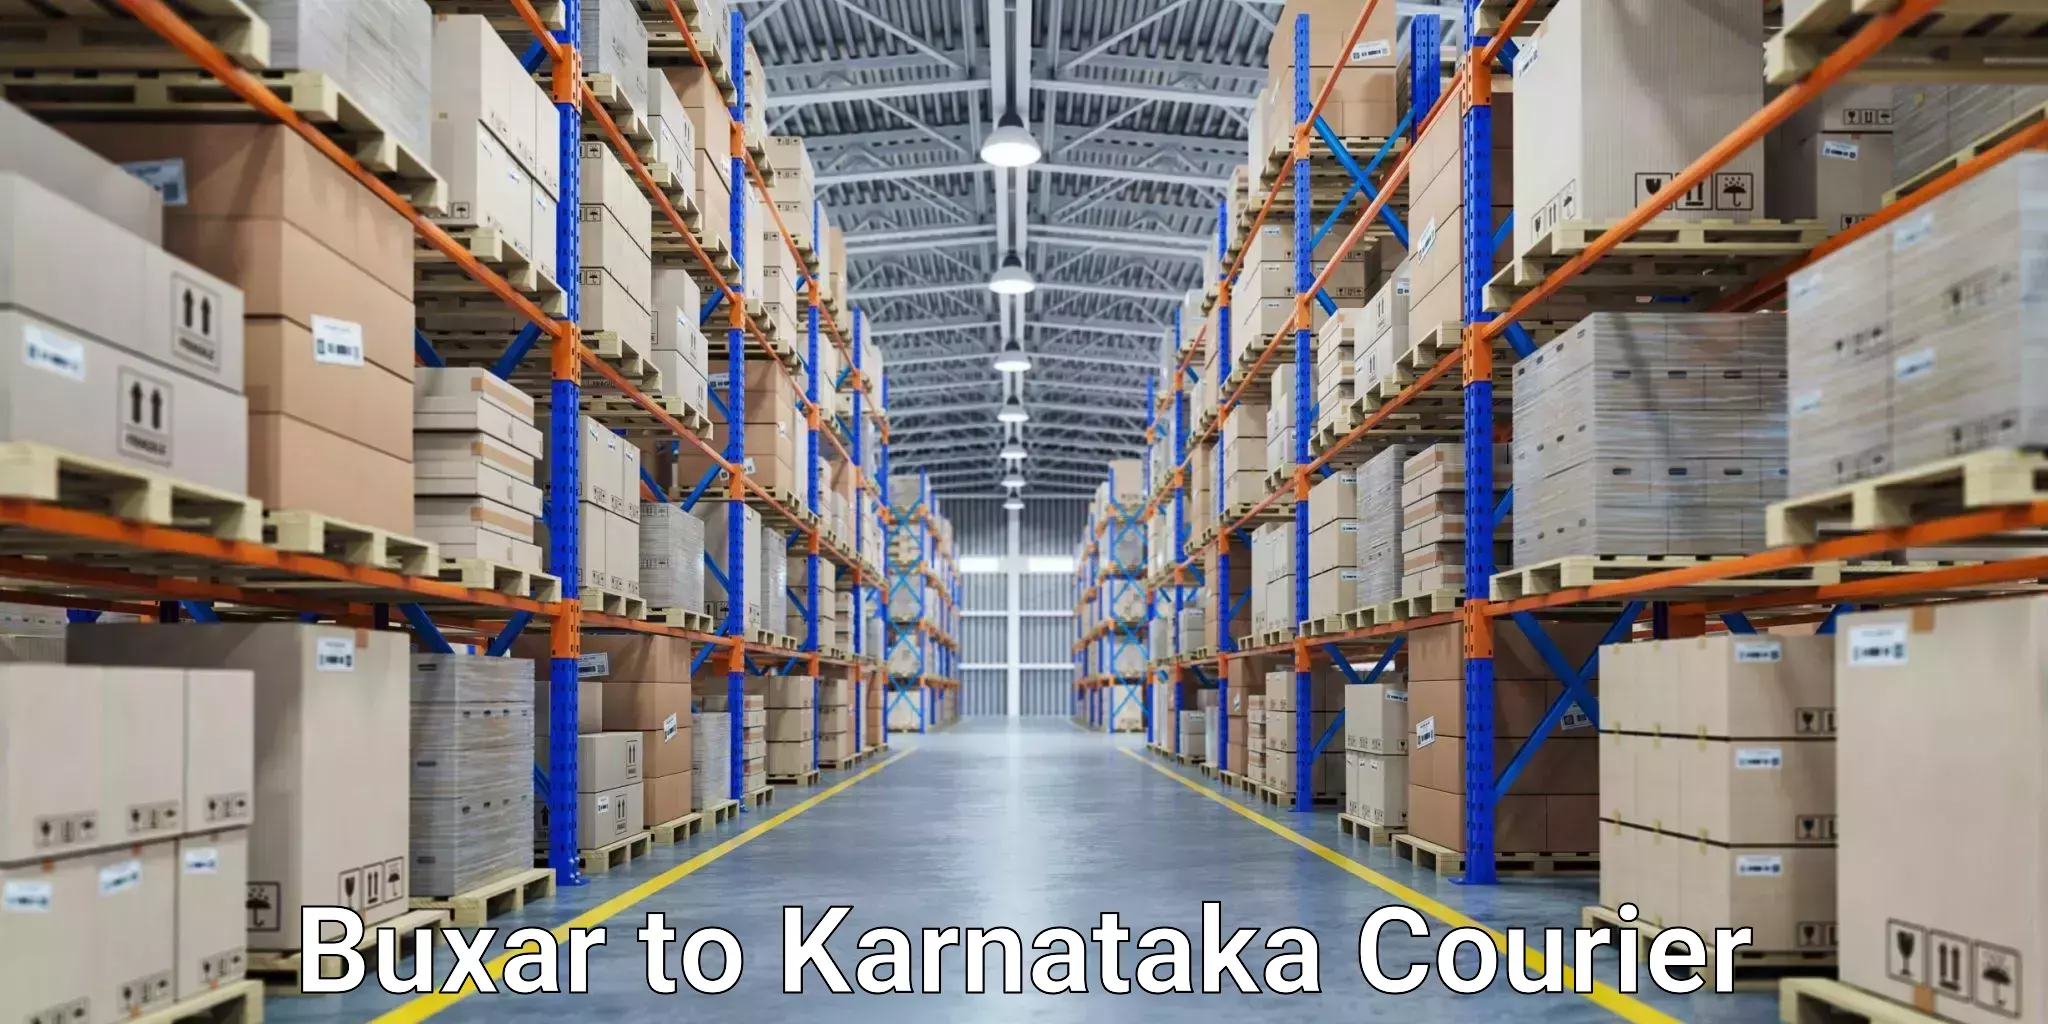 User-friendly delivery service Buxar to Karnataka